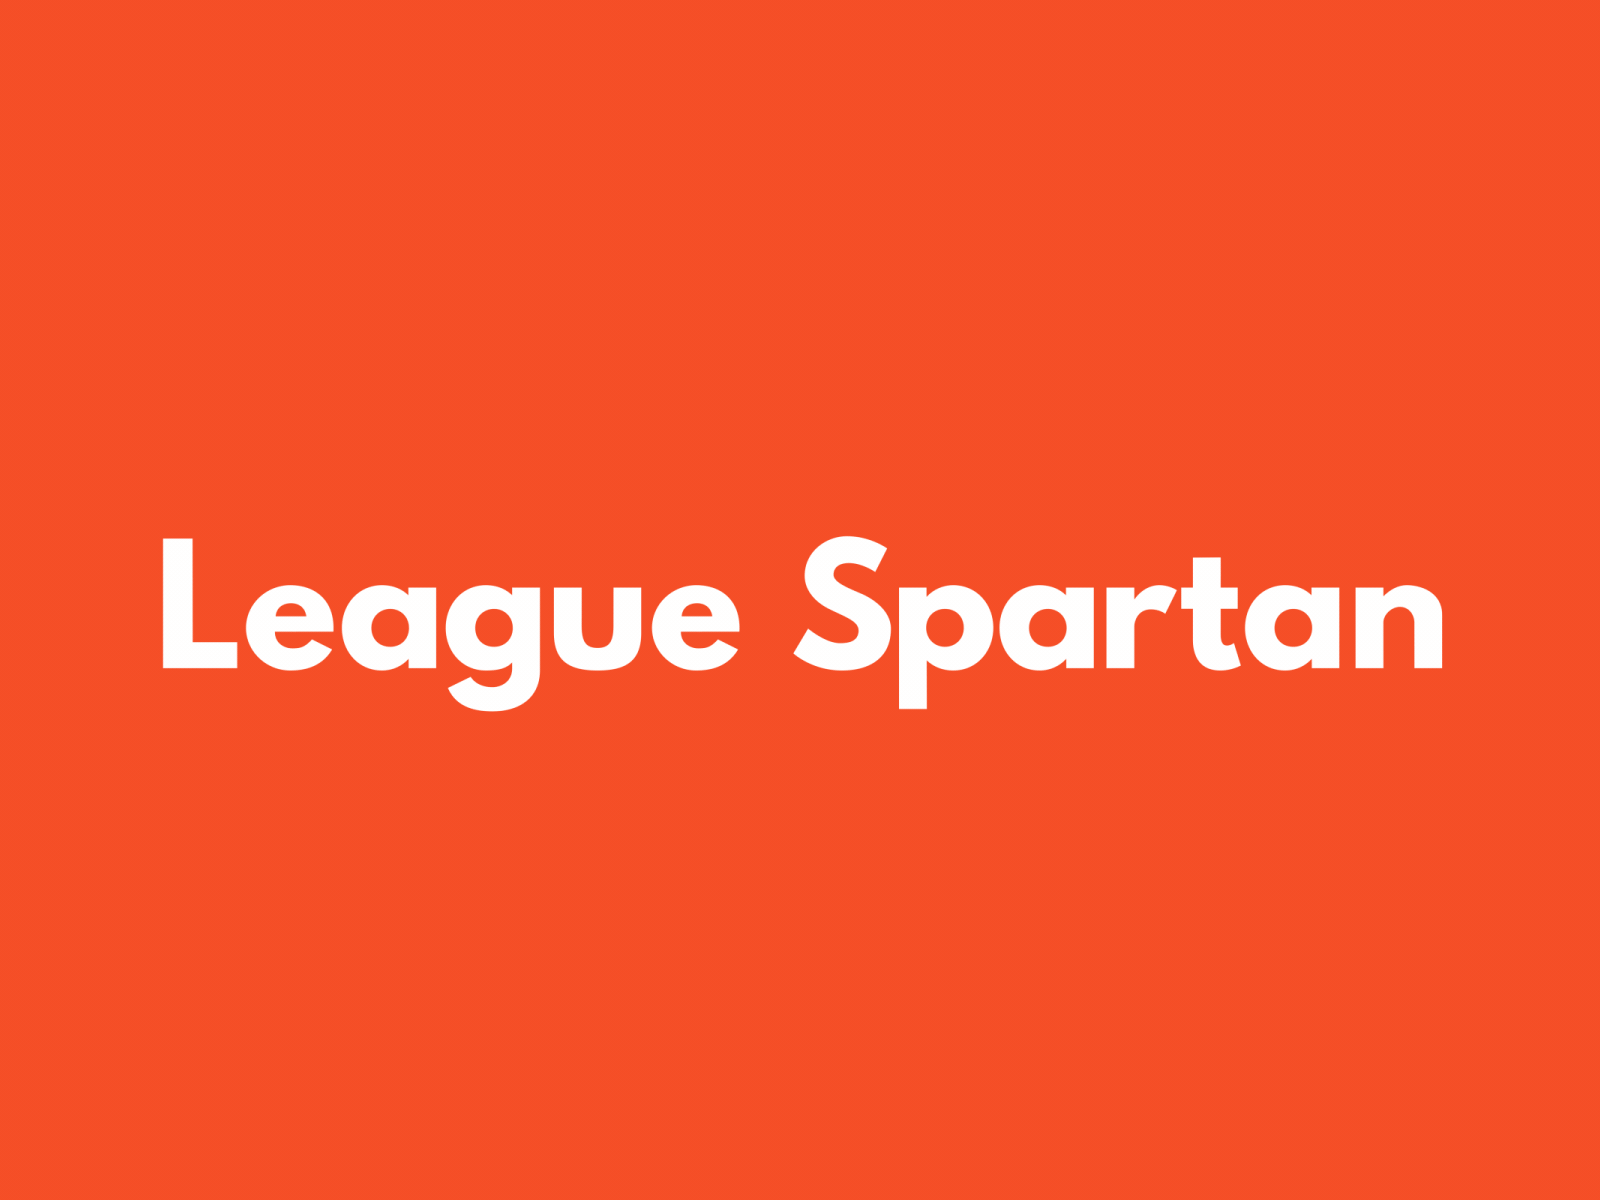 League Spartan - Animated Typeface